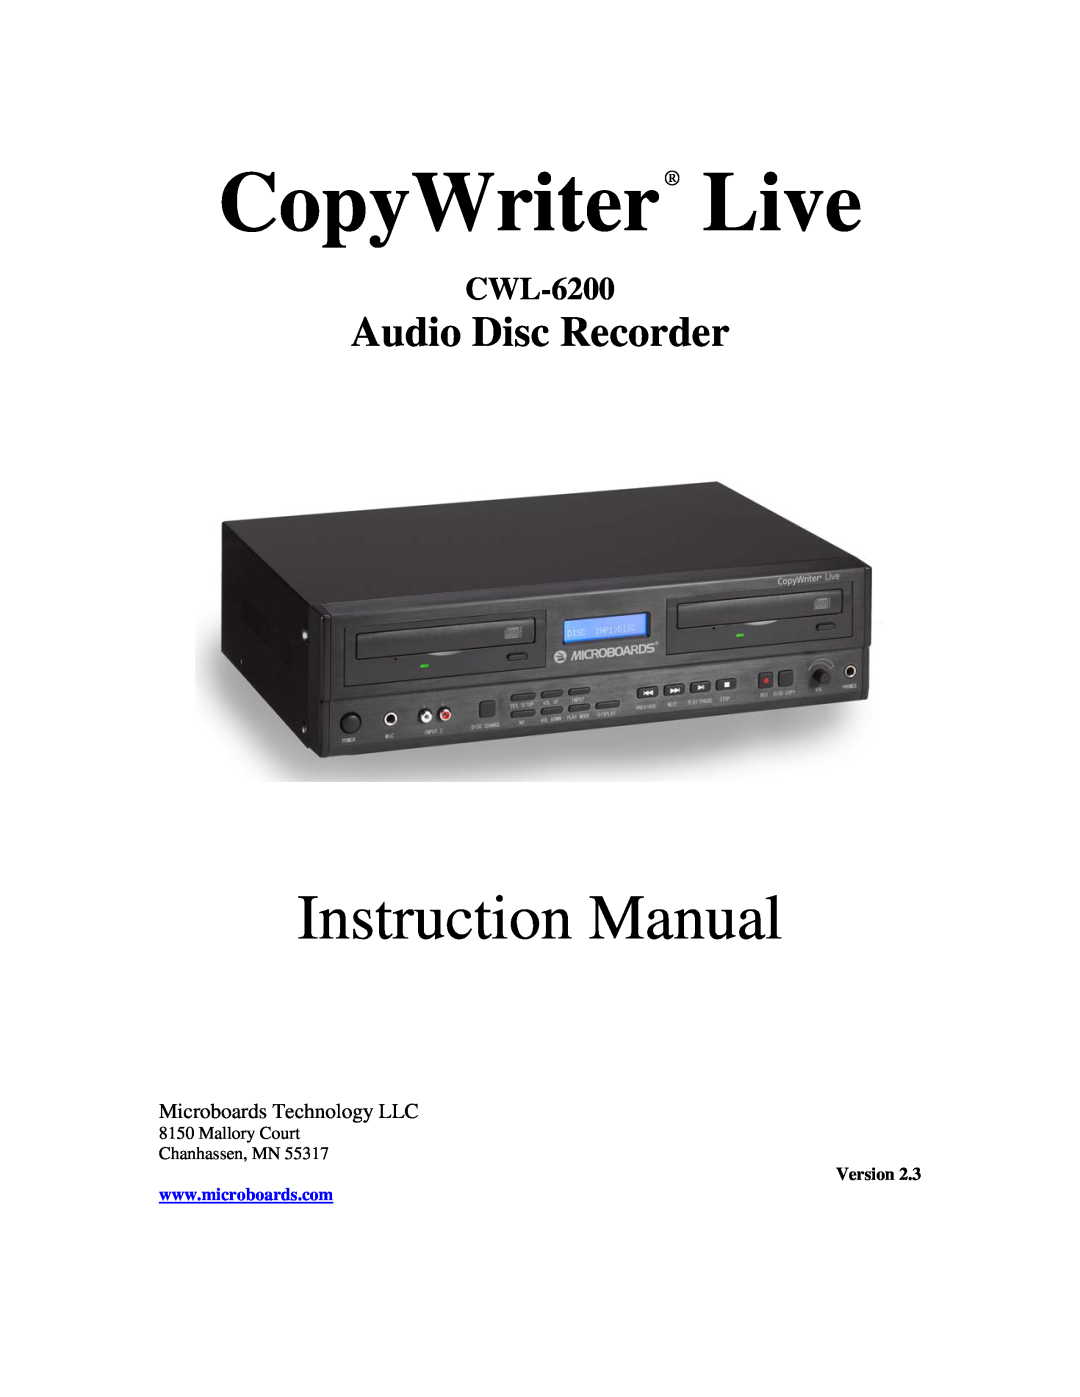 LG Electronics CWL-6200 instruction manual Audio Disc Recorder, CopyWriter Live, Mallory Court Chanhassen, MN, Version 